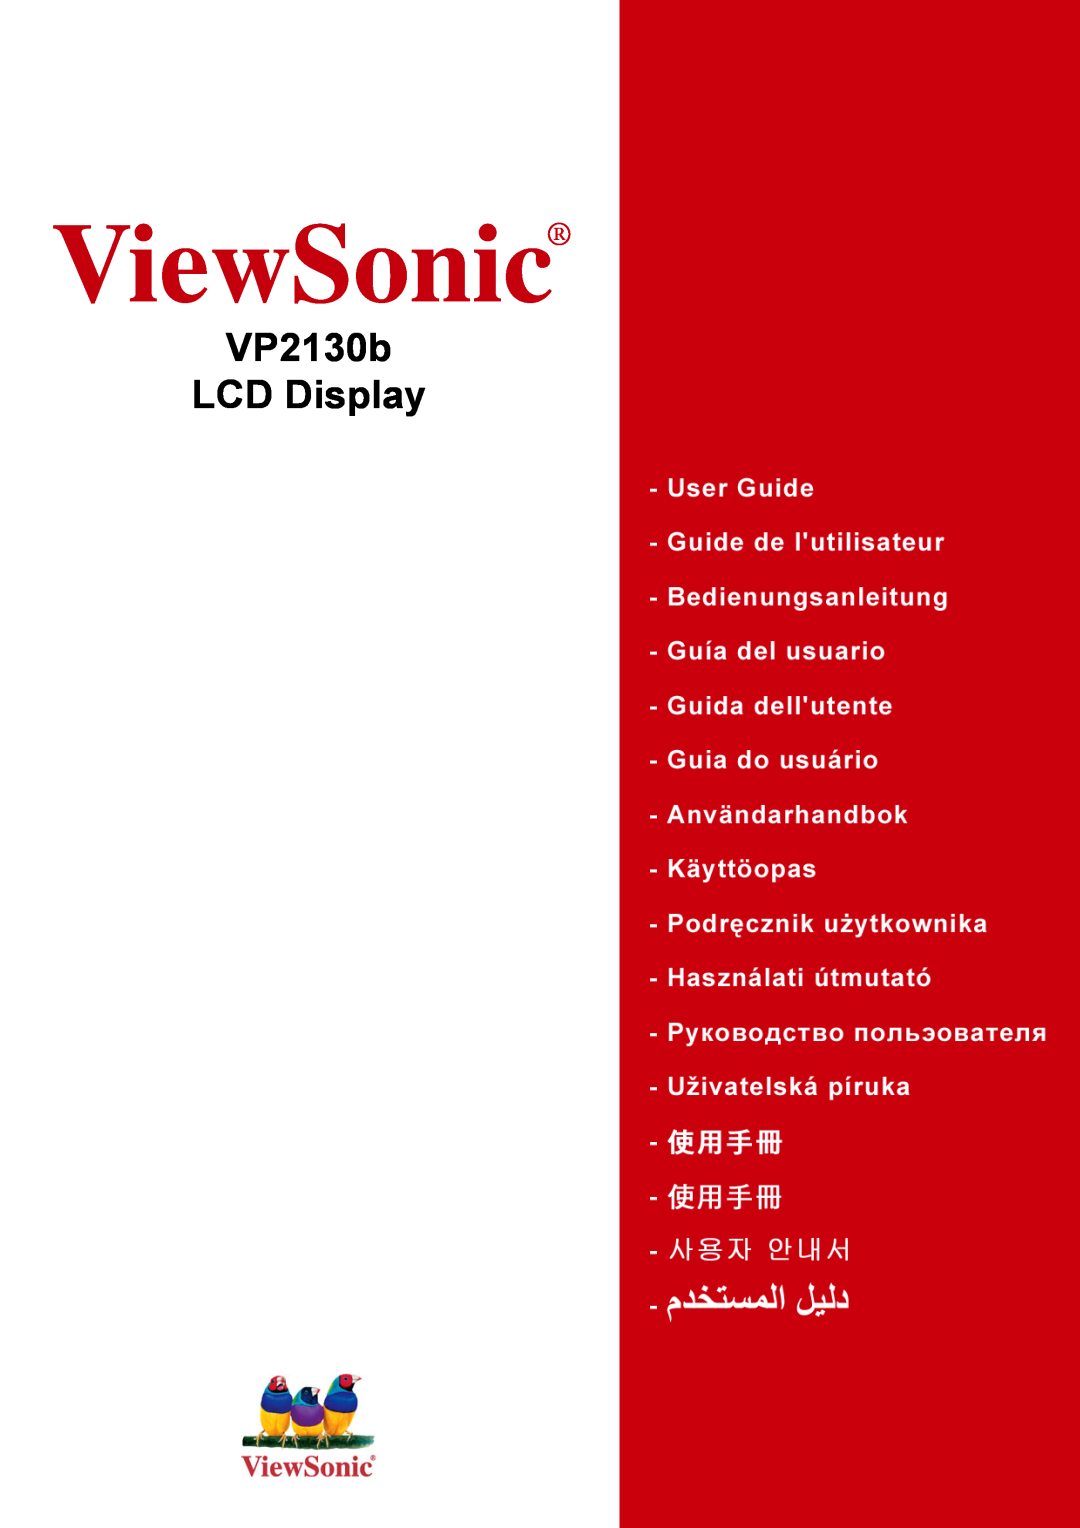 ViewSonic VP2130b-1 manual ViewSonic, VP2130b LCD Display 